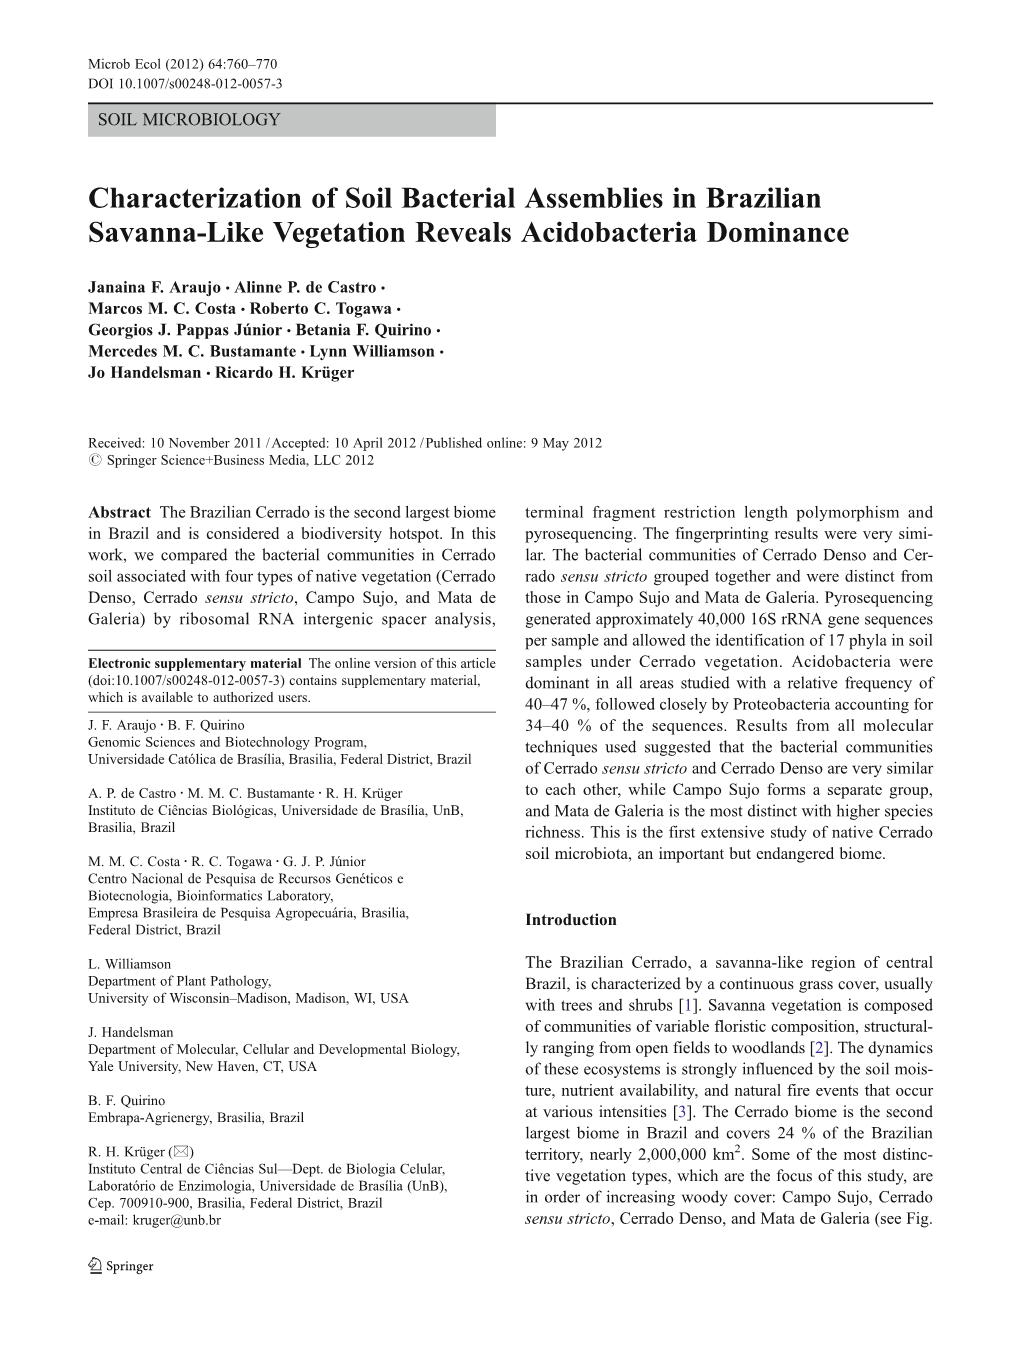 Characterization of Soil Bacterial Assemblies in Brazilian Savanna-Like Vegetation Reveals Acidobacteria Dominance